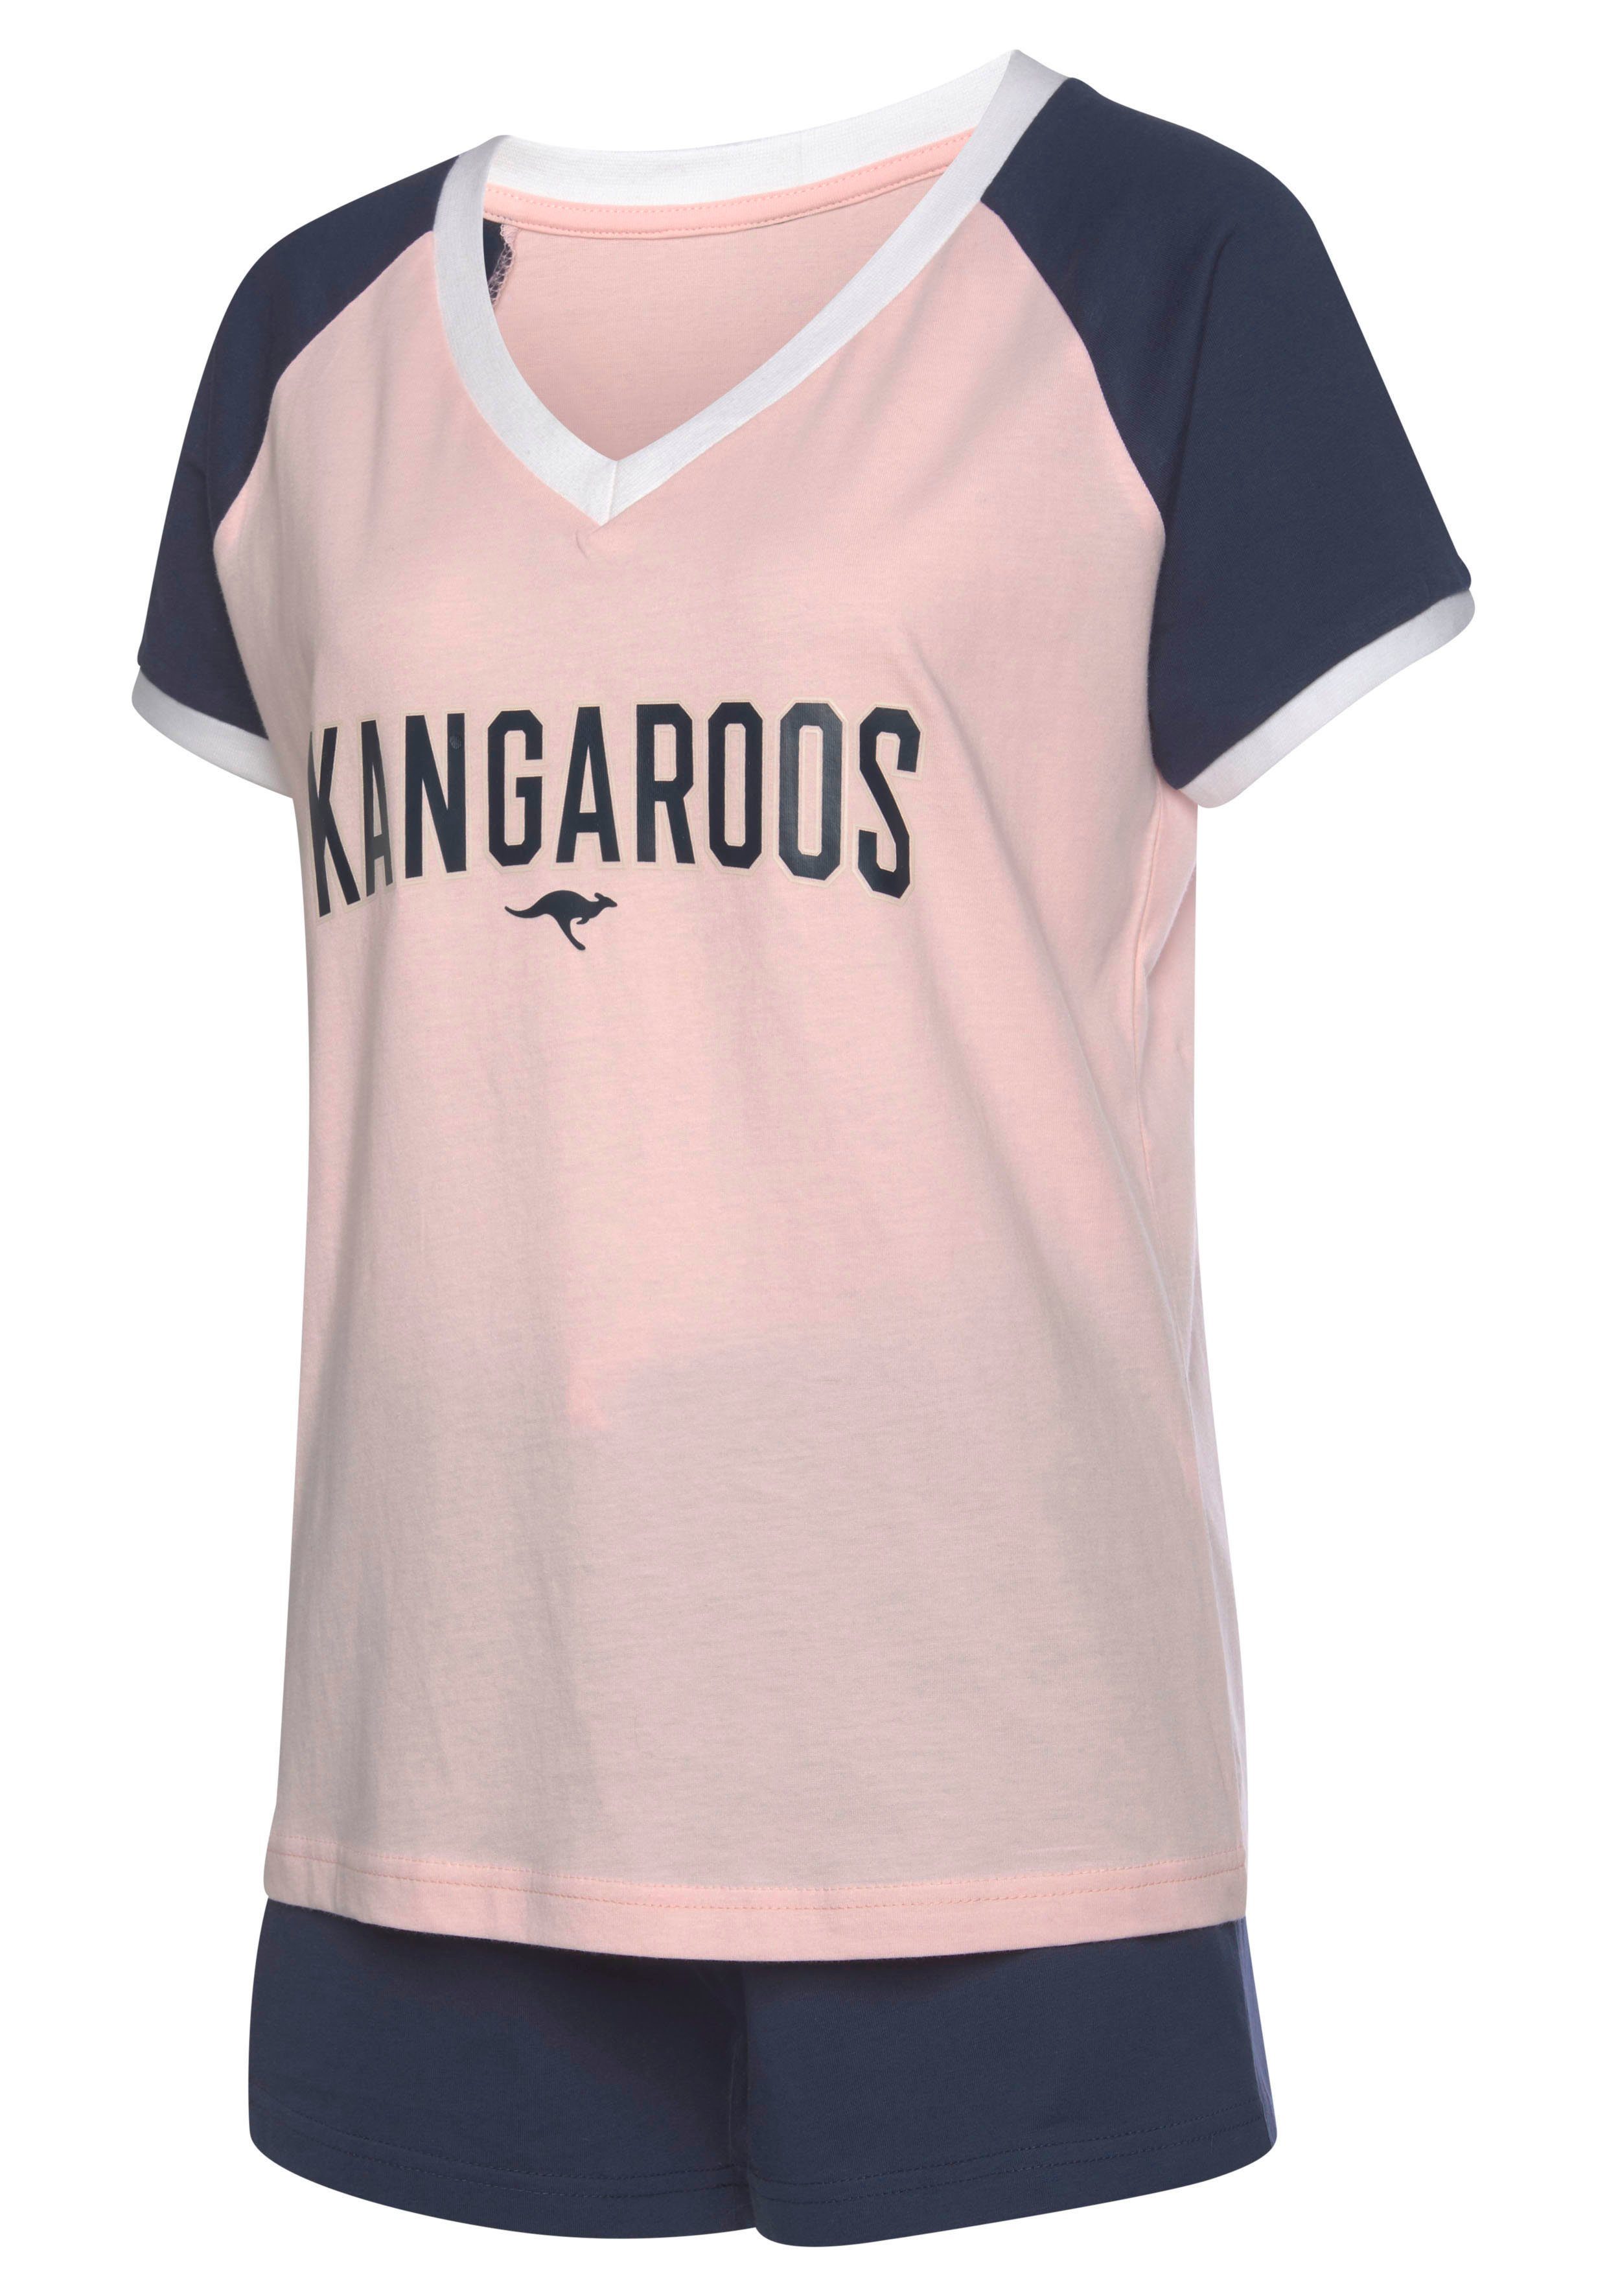 KangaROOS Shorty kontrastfarbenen rosa-dunkelblau Stück) mit tlg., Raglanärmeln 1 (2